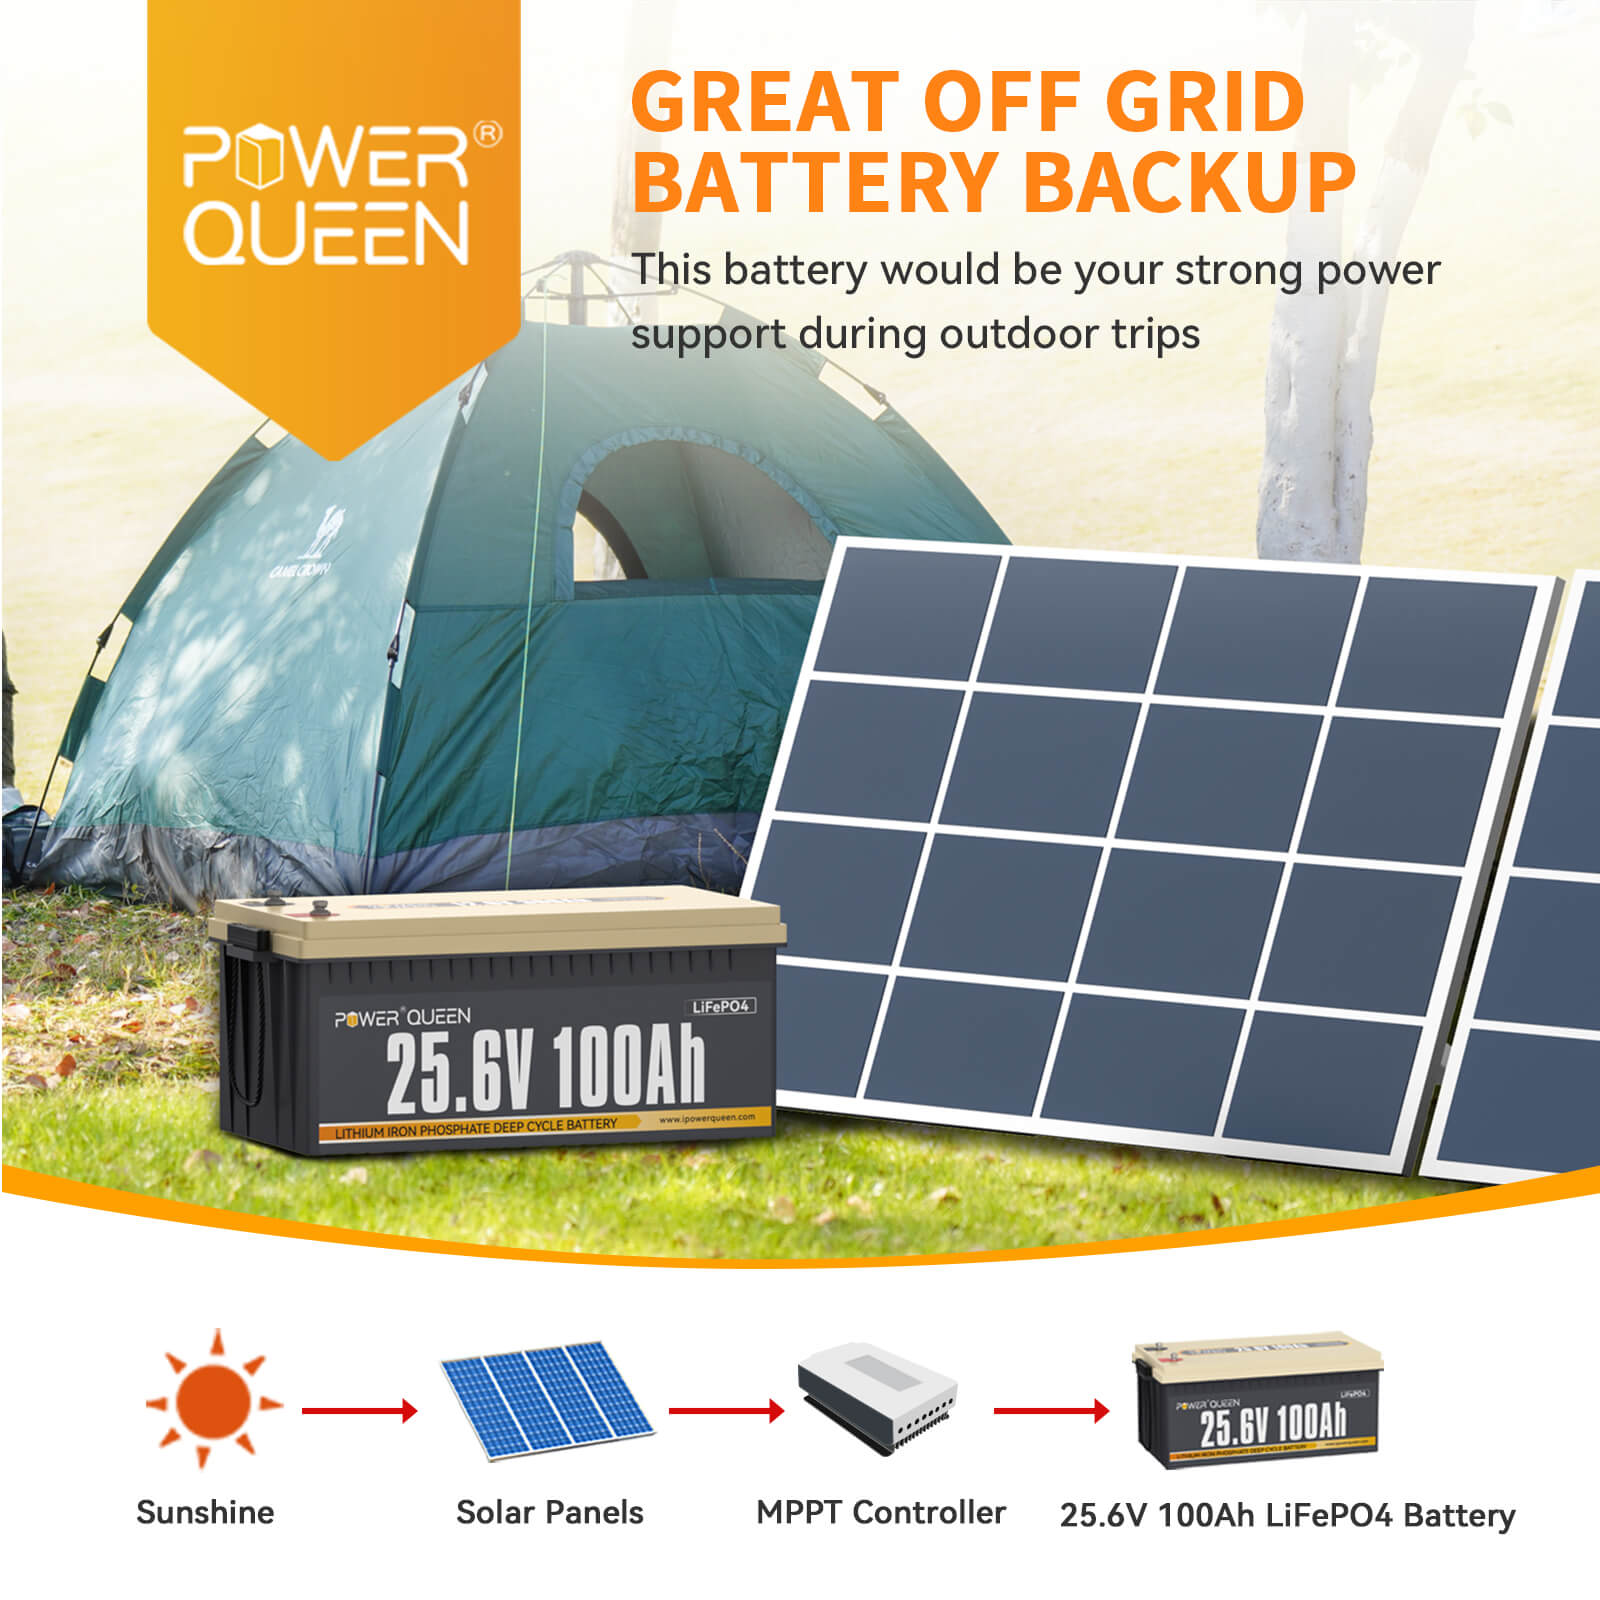 Power Queen 25.6V 100Ah LiFePO4 Battery